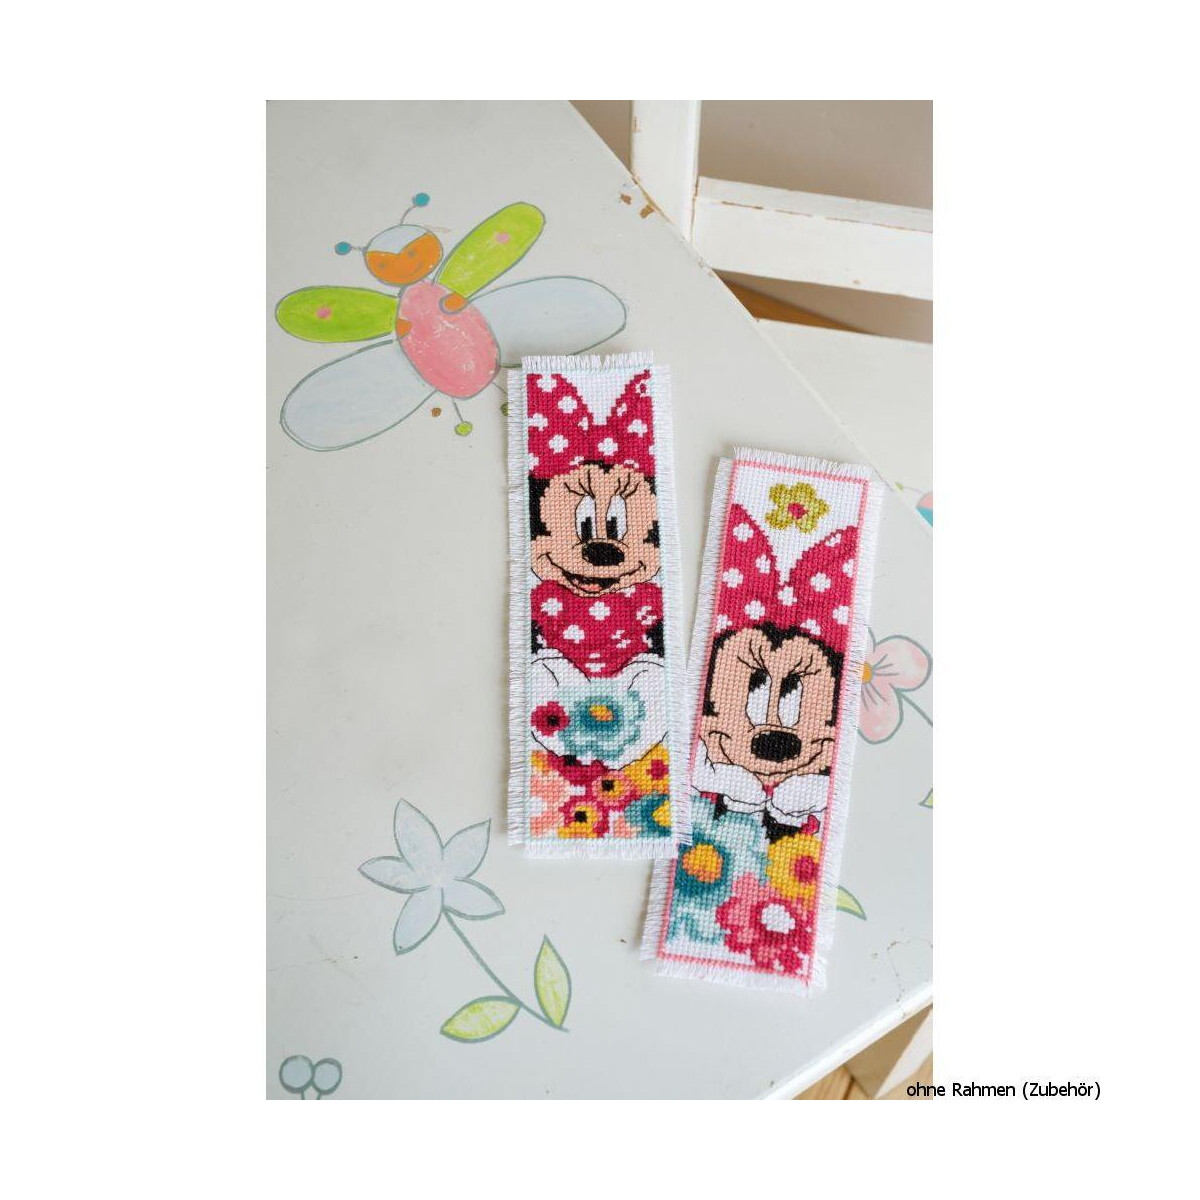 Vervaco Disney bookmark "Minnie", set di 2,...